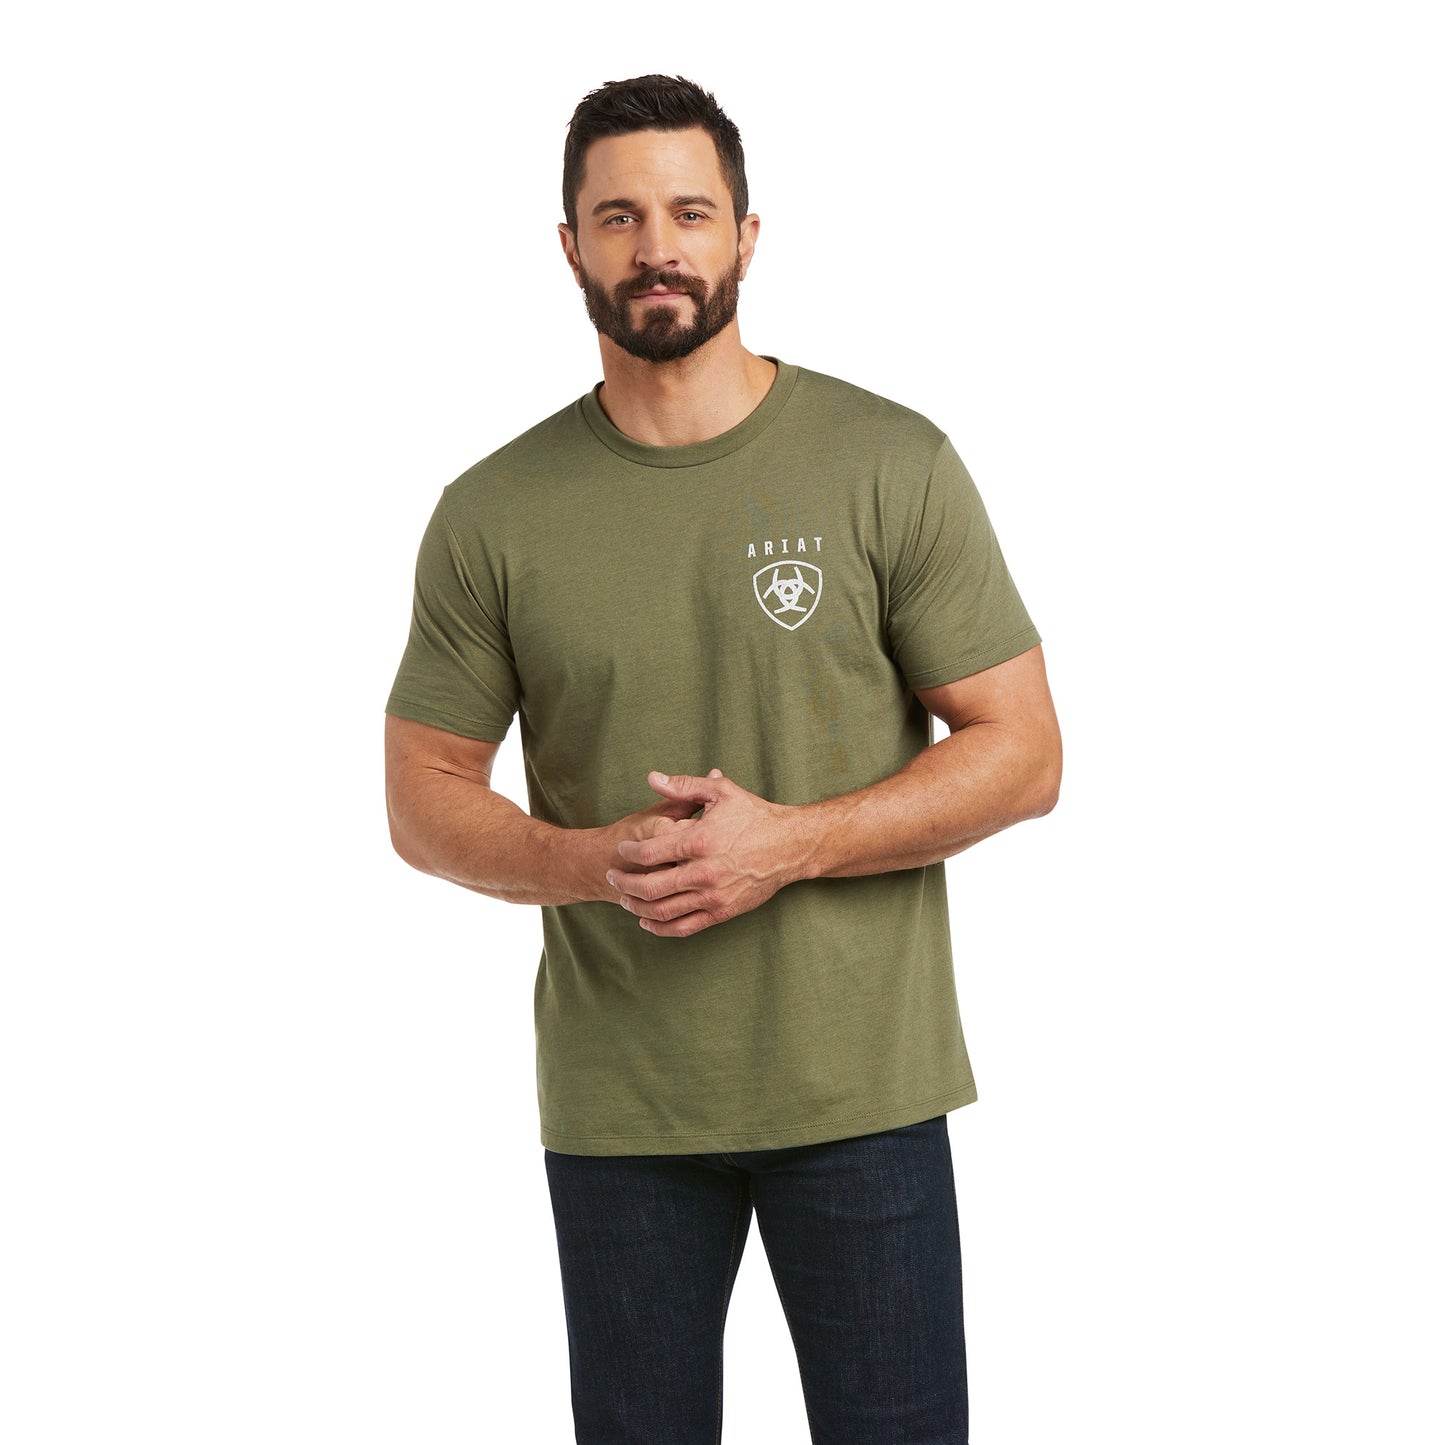 Ariat Men's Vertical Freedom Military Heather Green T-Shirt 10037028